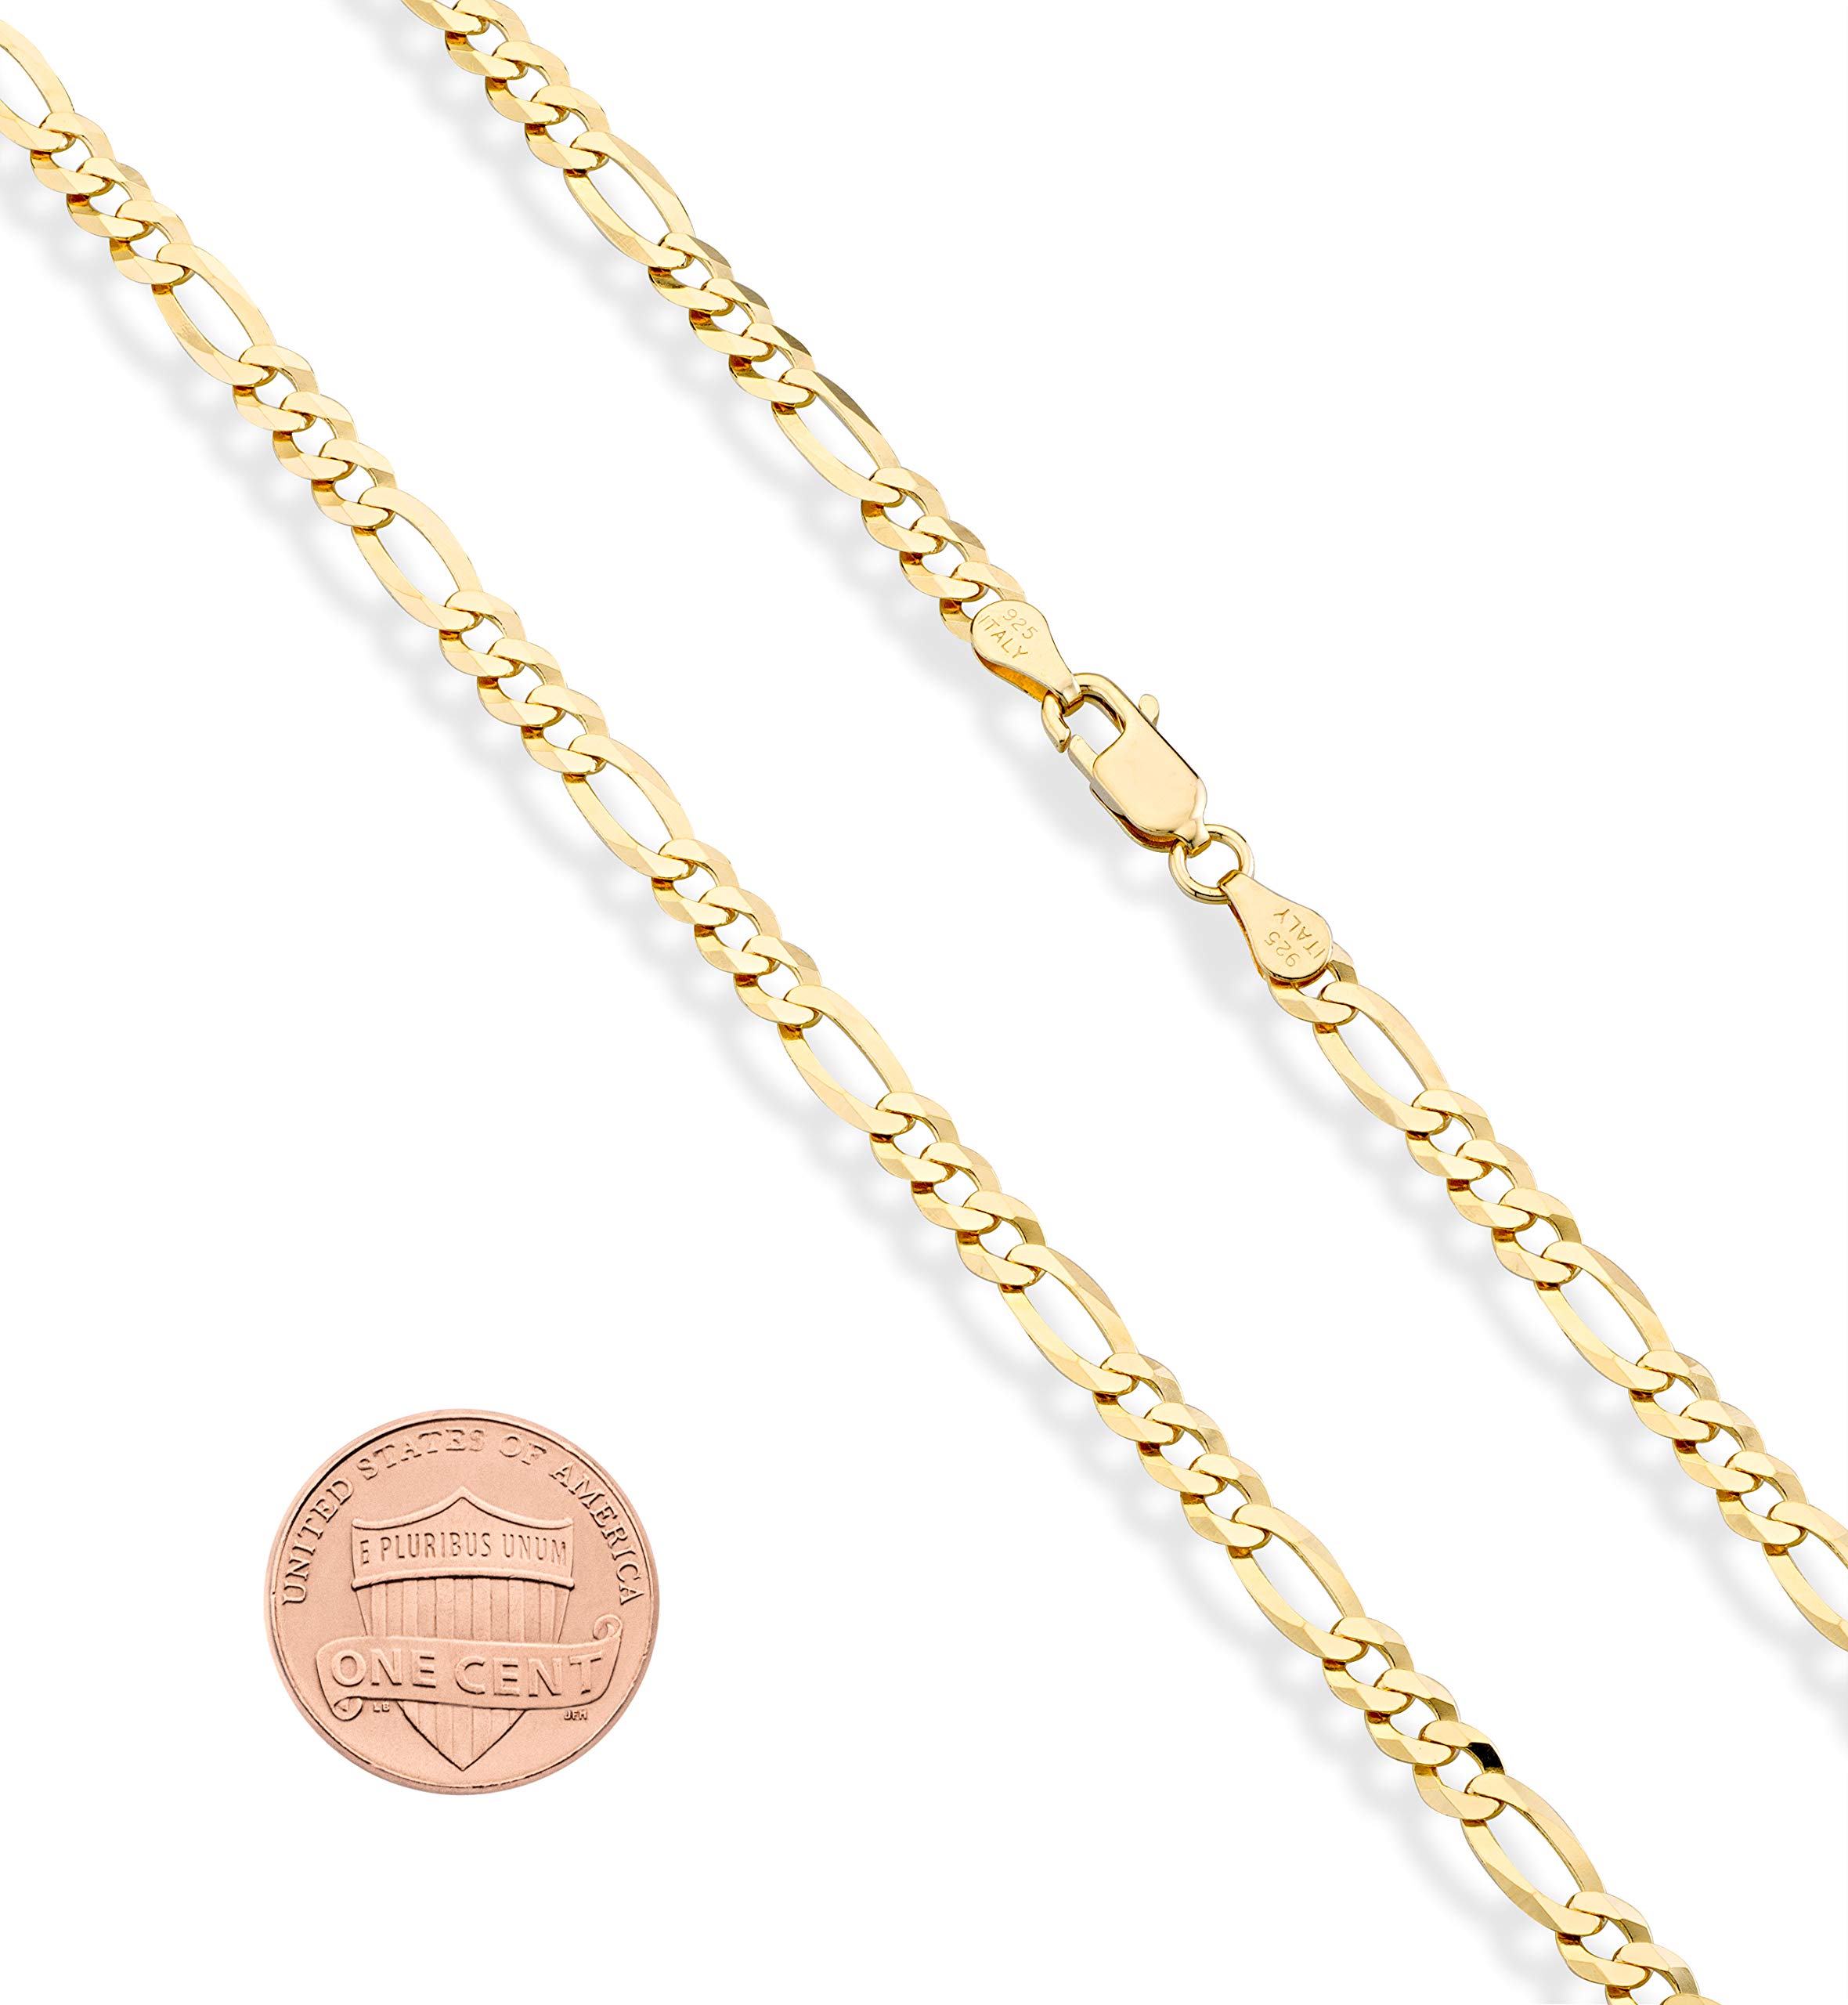 Miabella Solid 18K Gold Over Sterling Silver Italian 5mm Diamond-Cut Figaro Chain Bracelet for Women Men, 925 Made in Italy